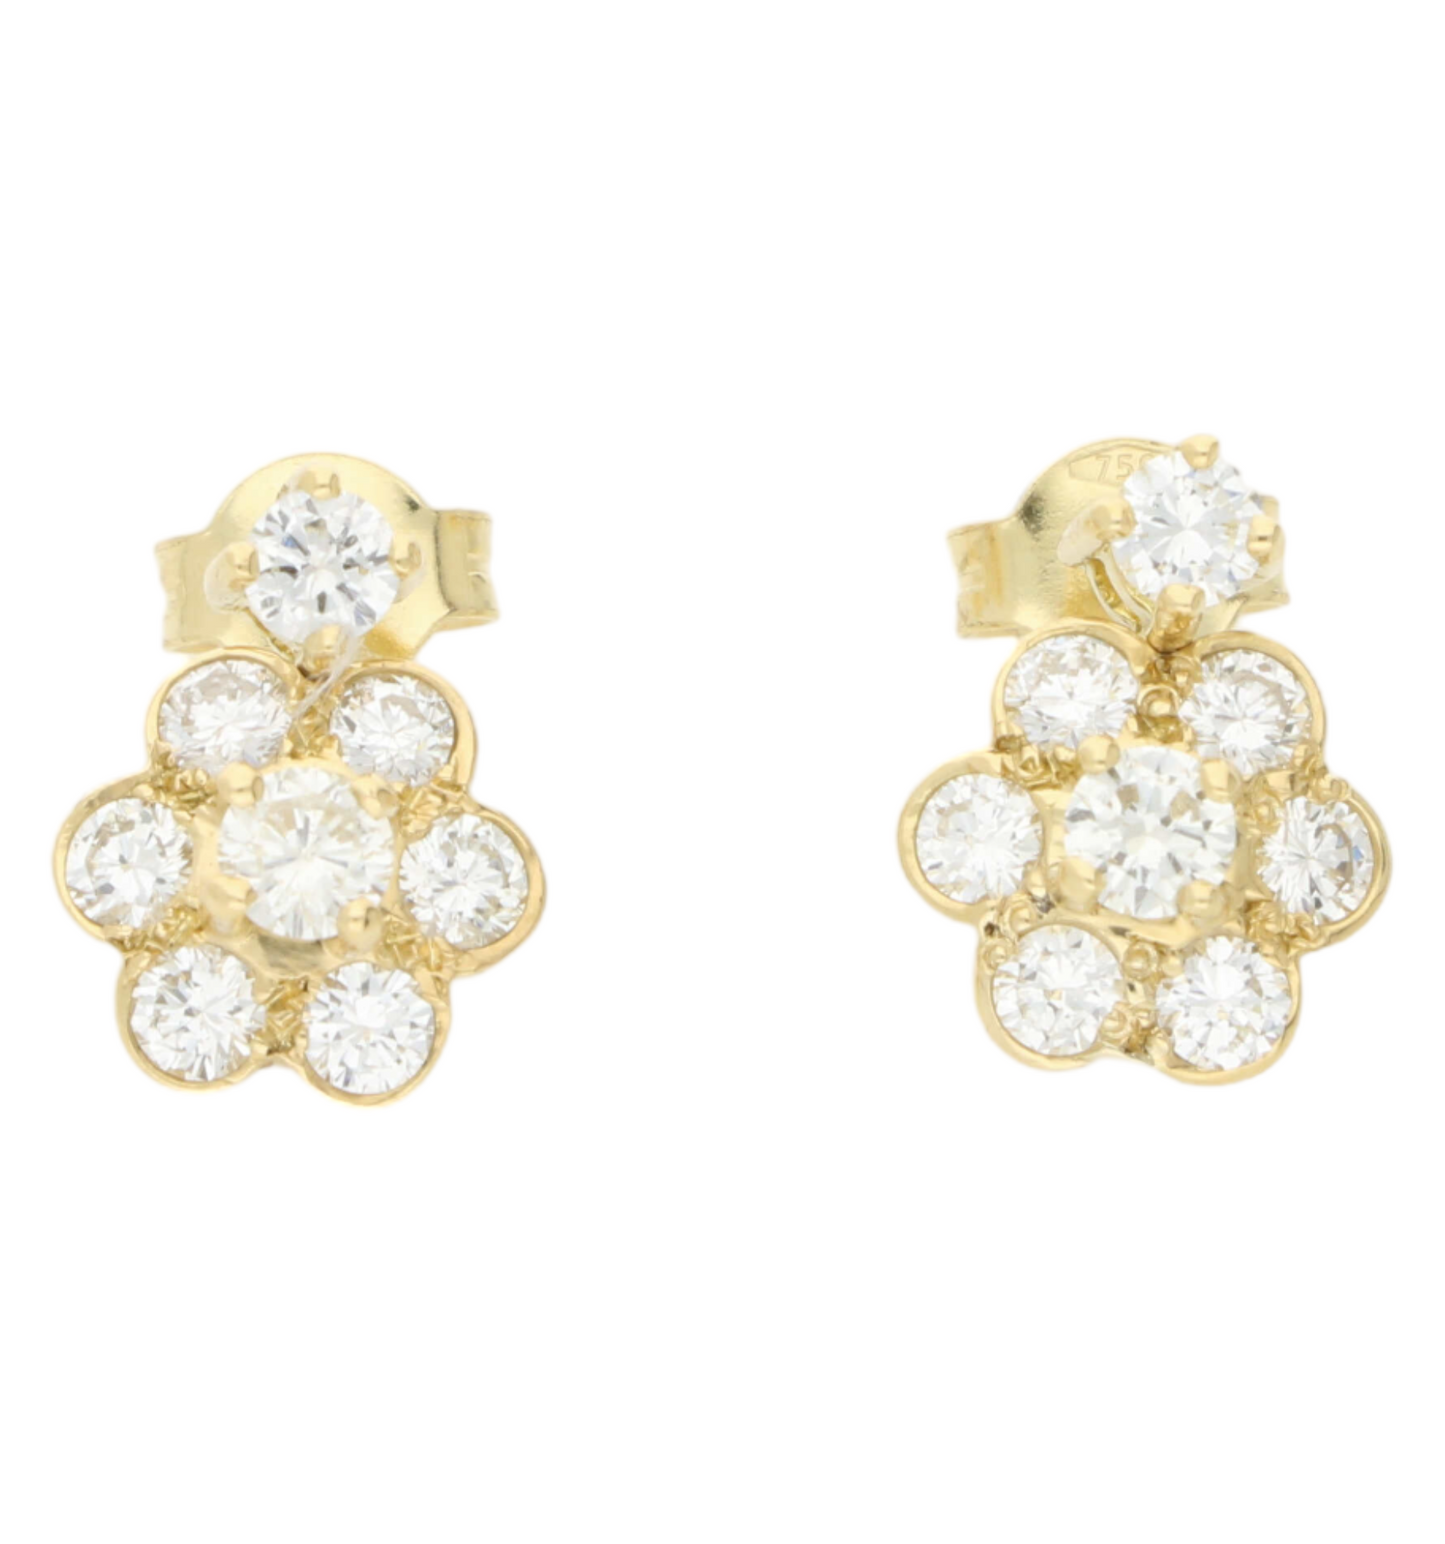 18ct diamond cluster drop earrings